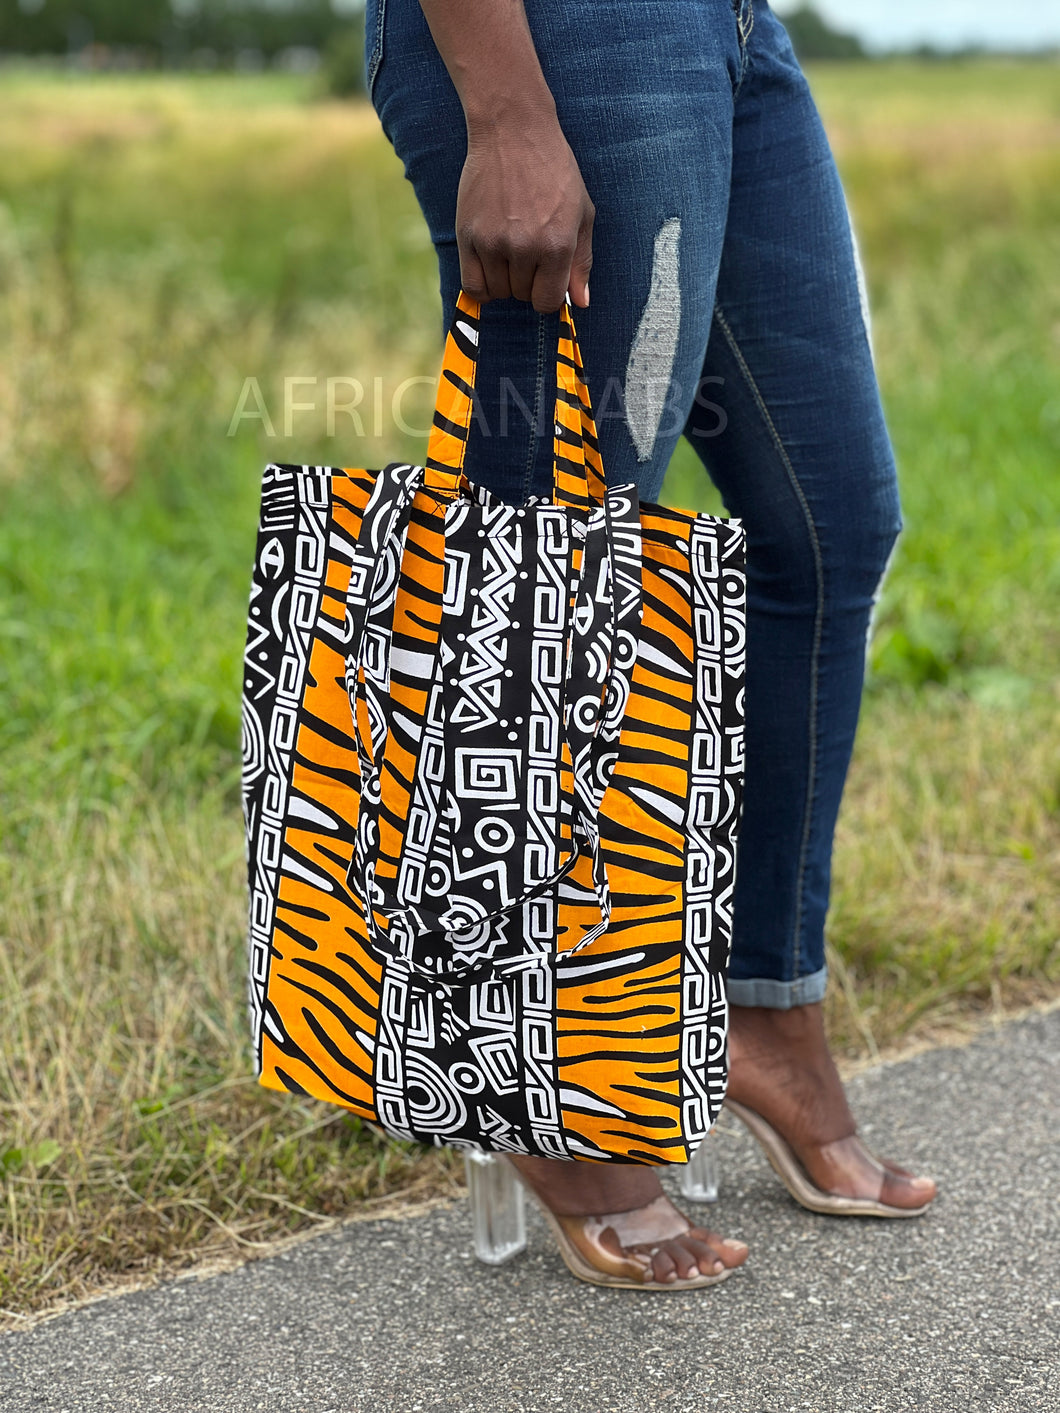 Shopper bag with African print - Yellow bogolan - Reusable Shopping Bag made of cotton